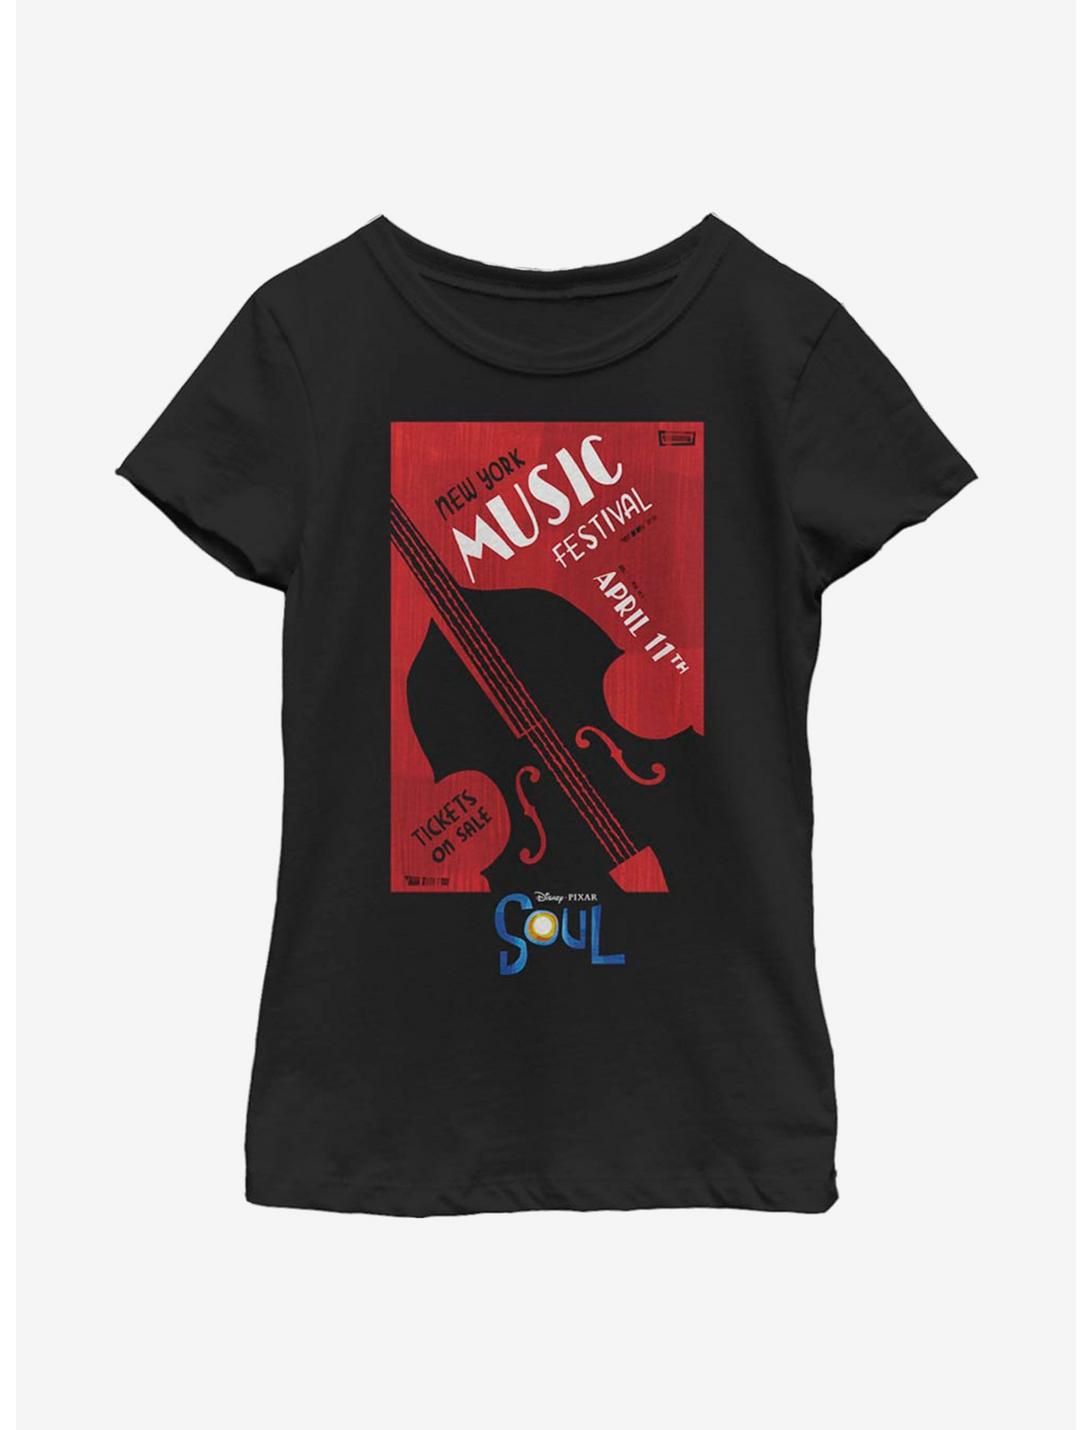 Disney Pixar Soul NY Music Festival Youth Girls T-Shirt, BLACK, hi-res